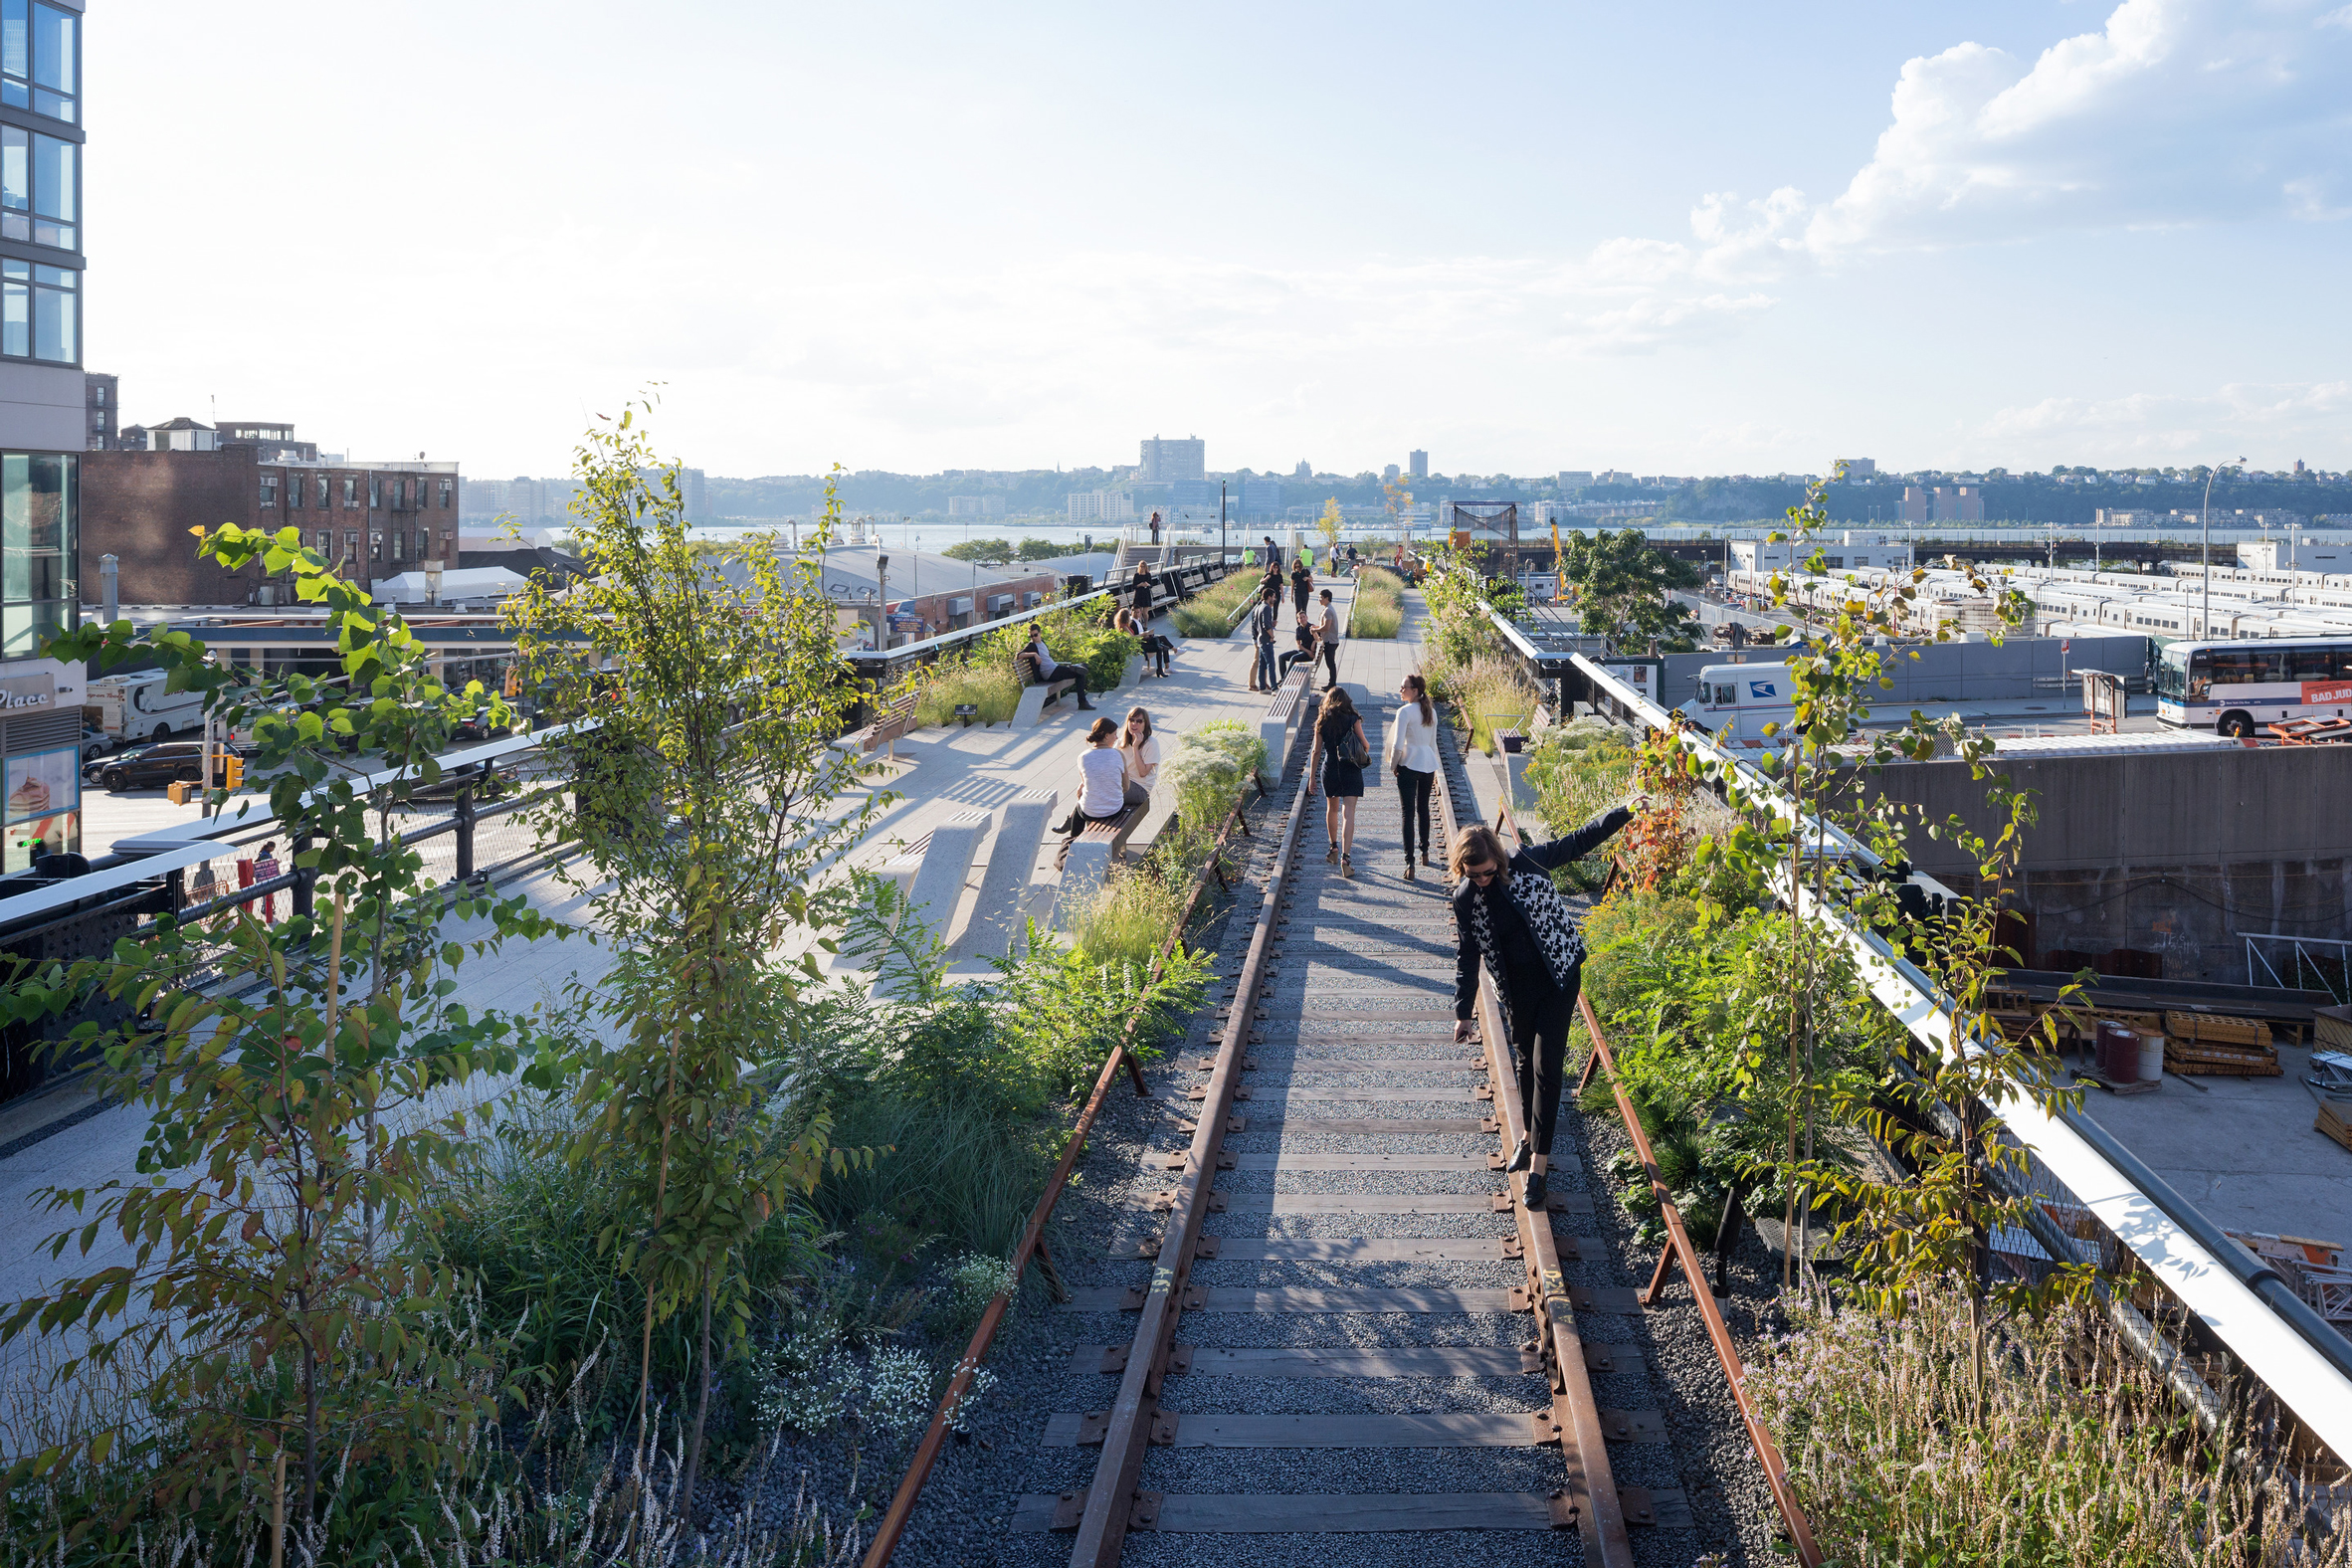 New York's High Line garden is a masterclass in urban regeneration